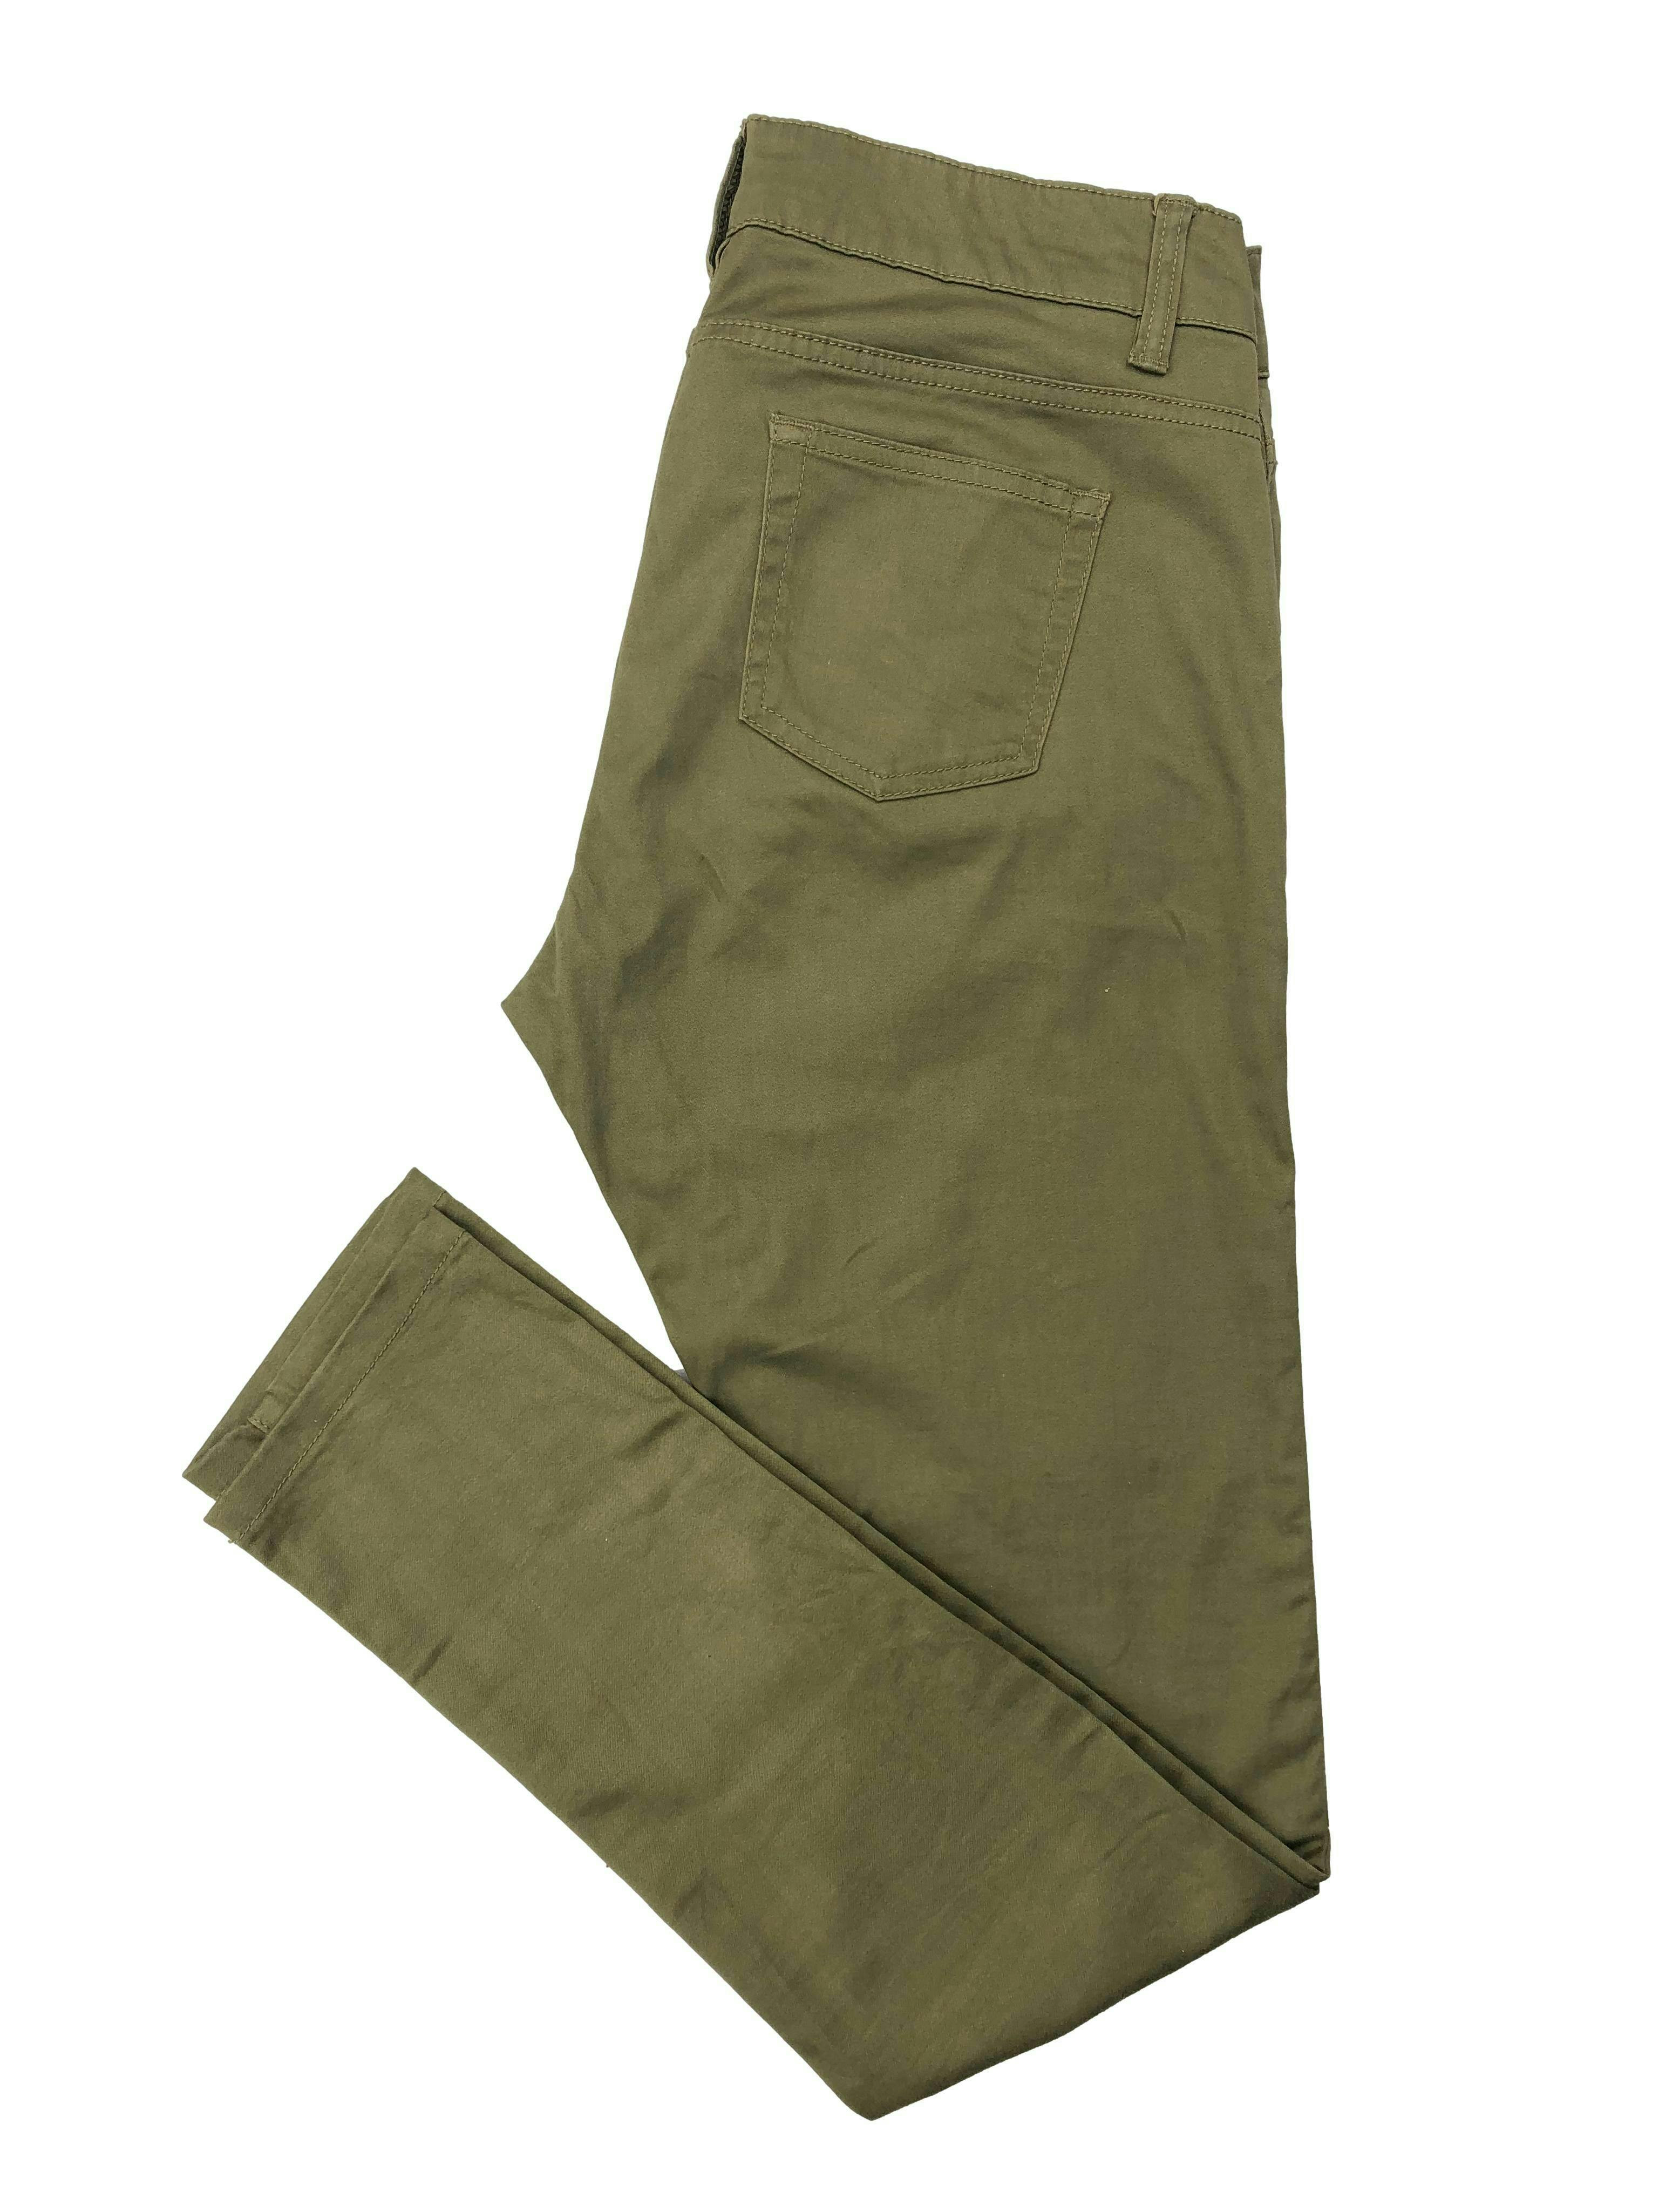 Pantalón drill verde olivo Topitop, corte slim, 5 bolsillos. Cintura 78cm Tiro 24cm Largo 97cm